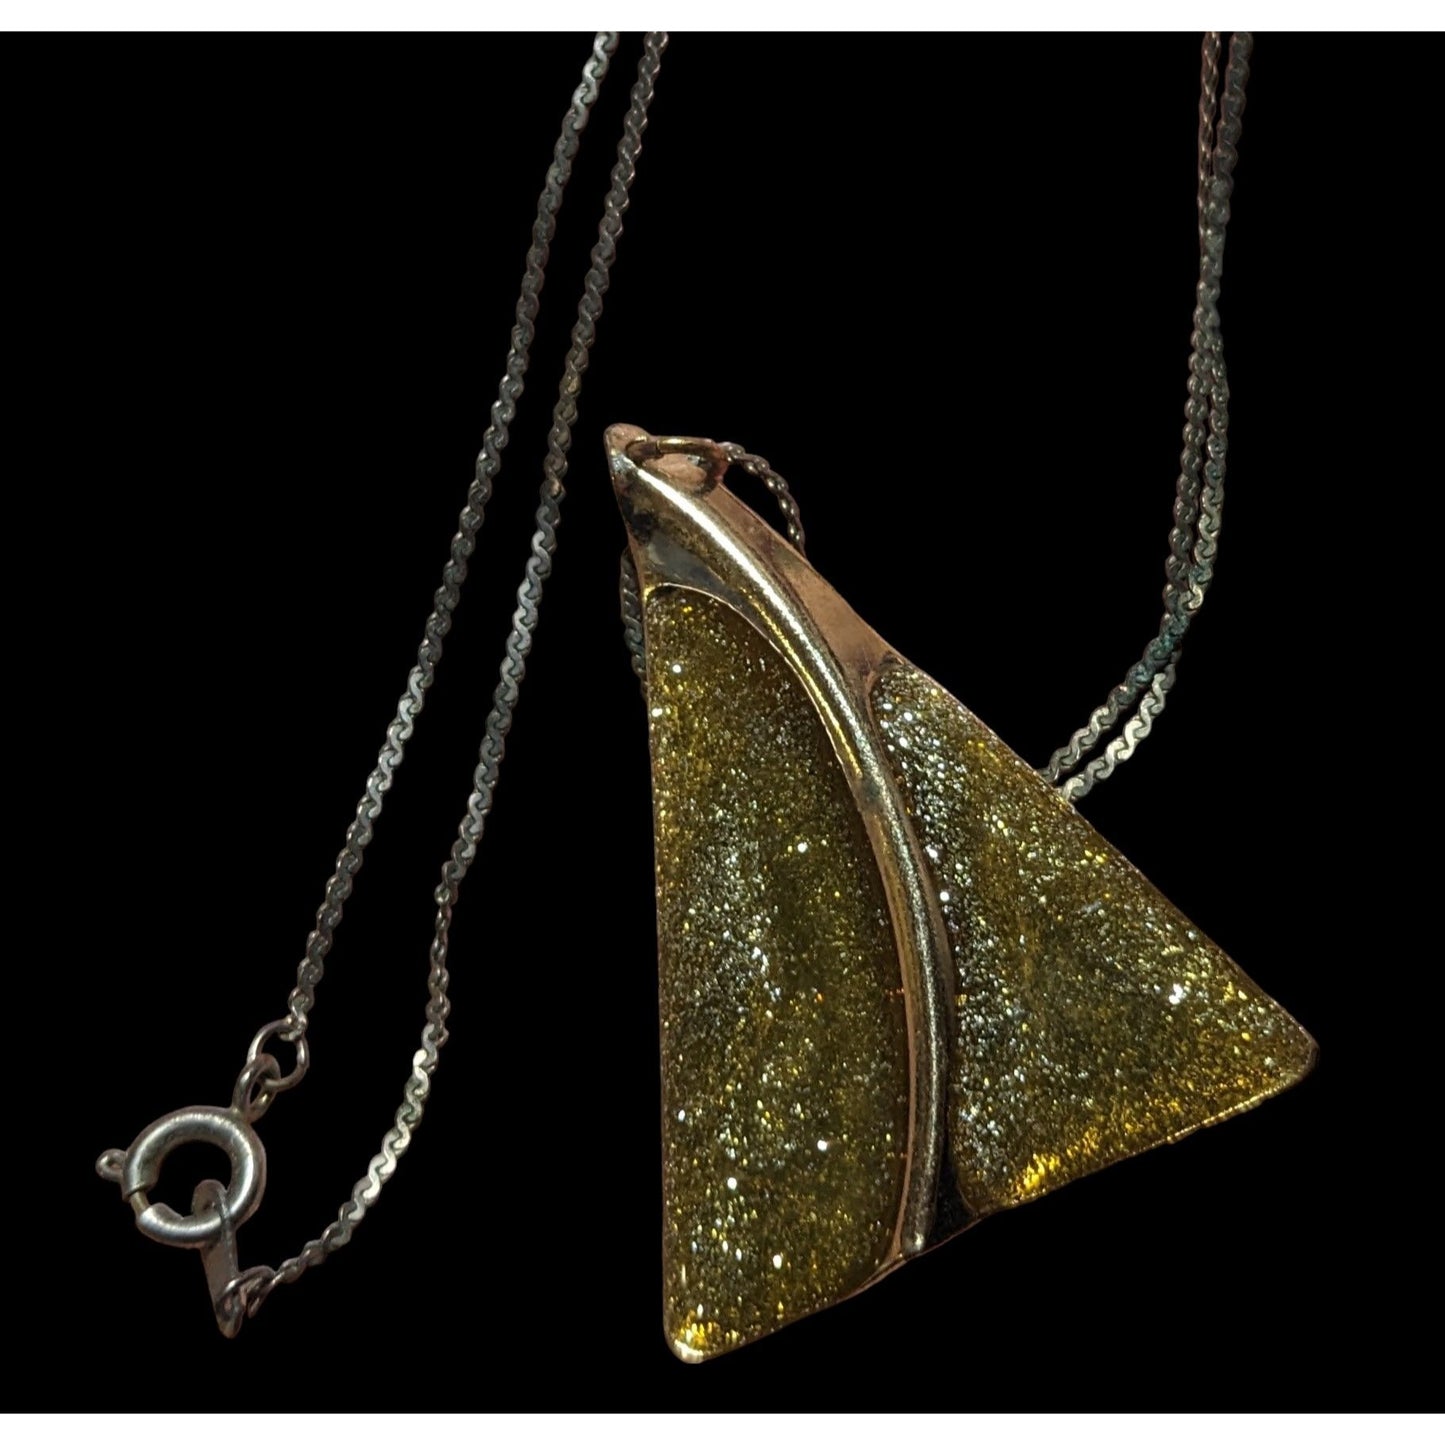 Gold Glitter Triangle Pendant Necklace